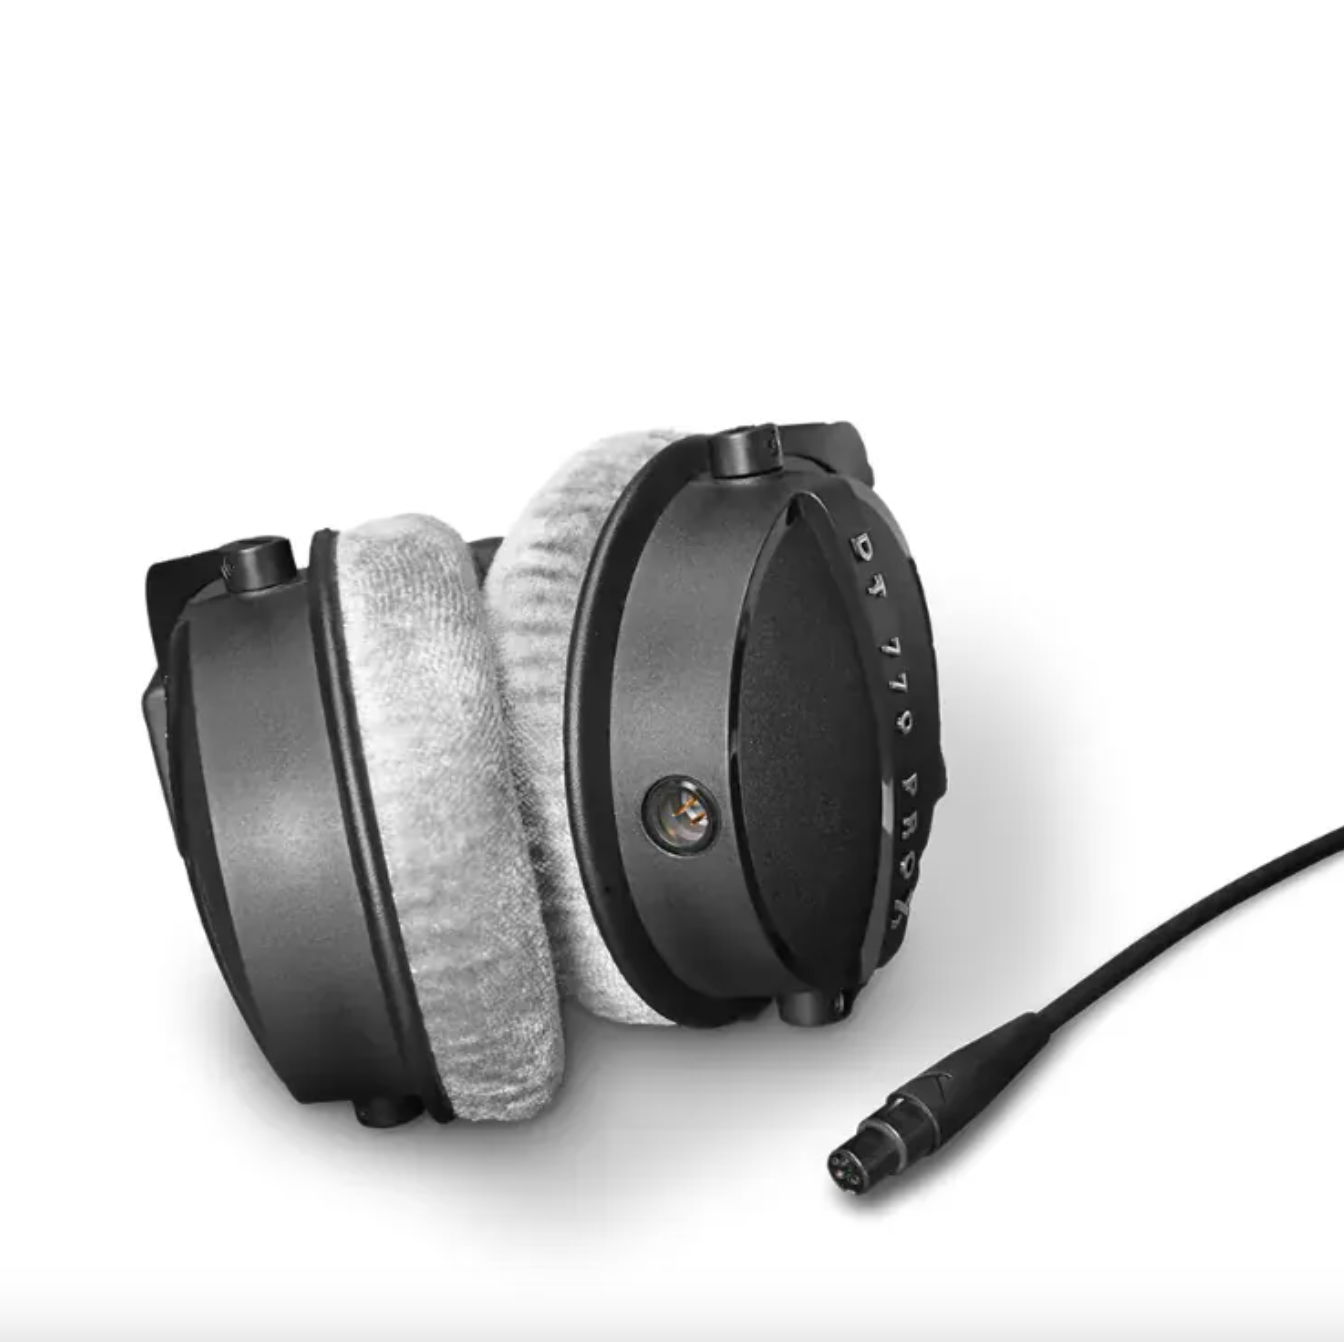 Beyerdynamic DT 770 PRO X Limited Edition 封閉式頭戴監聽耳機